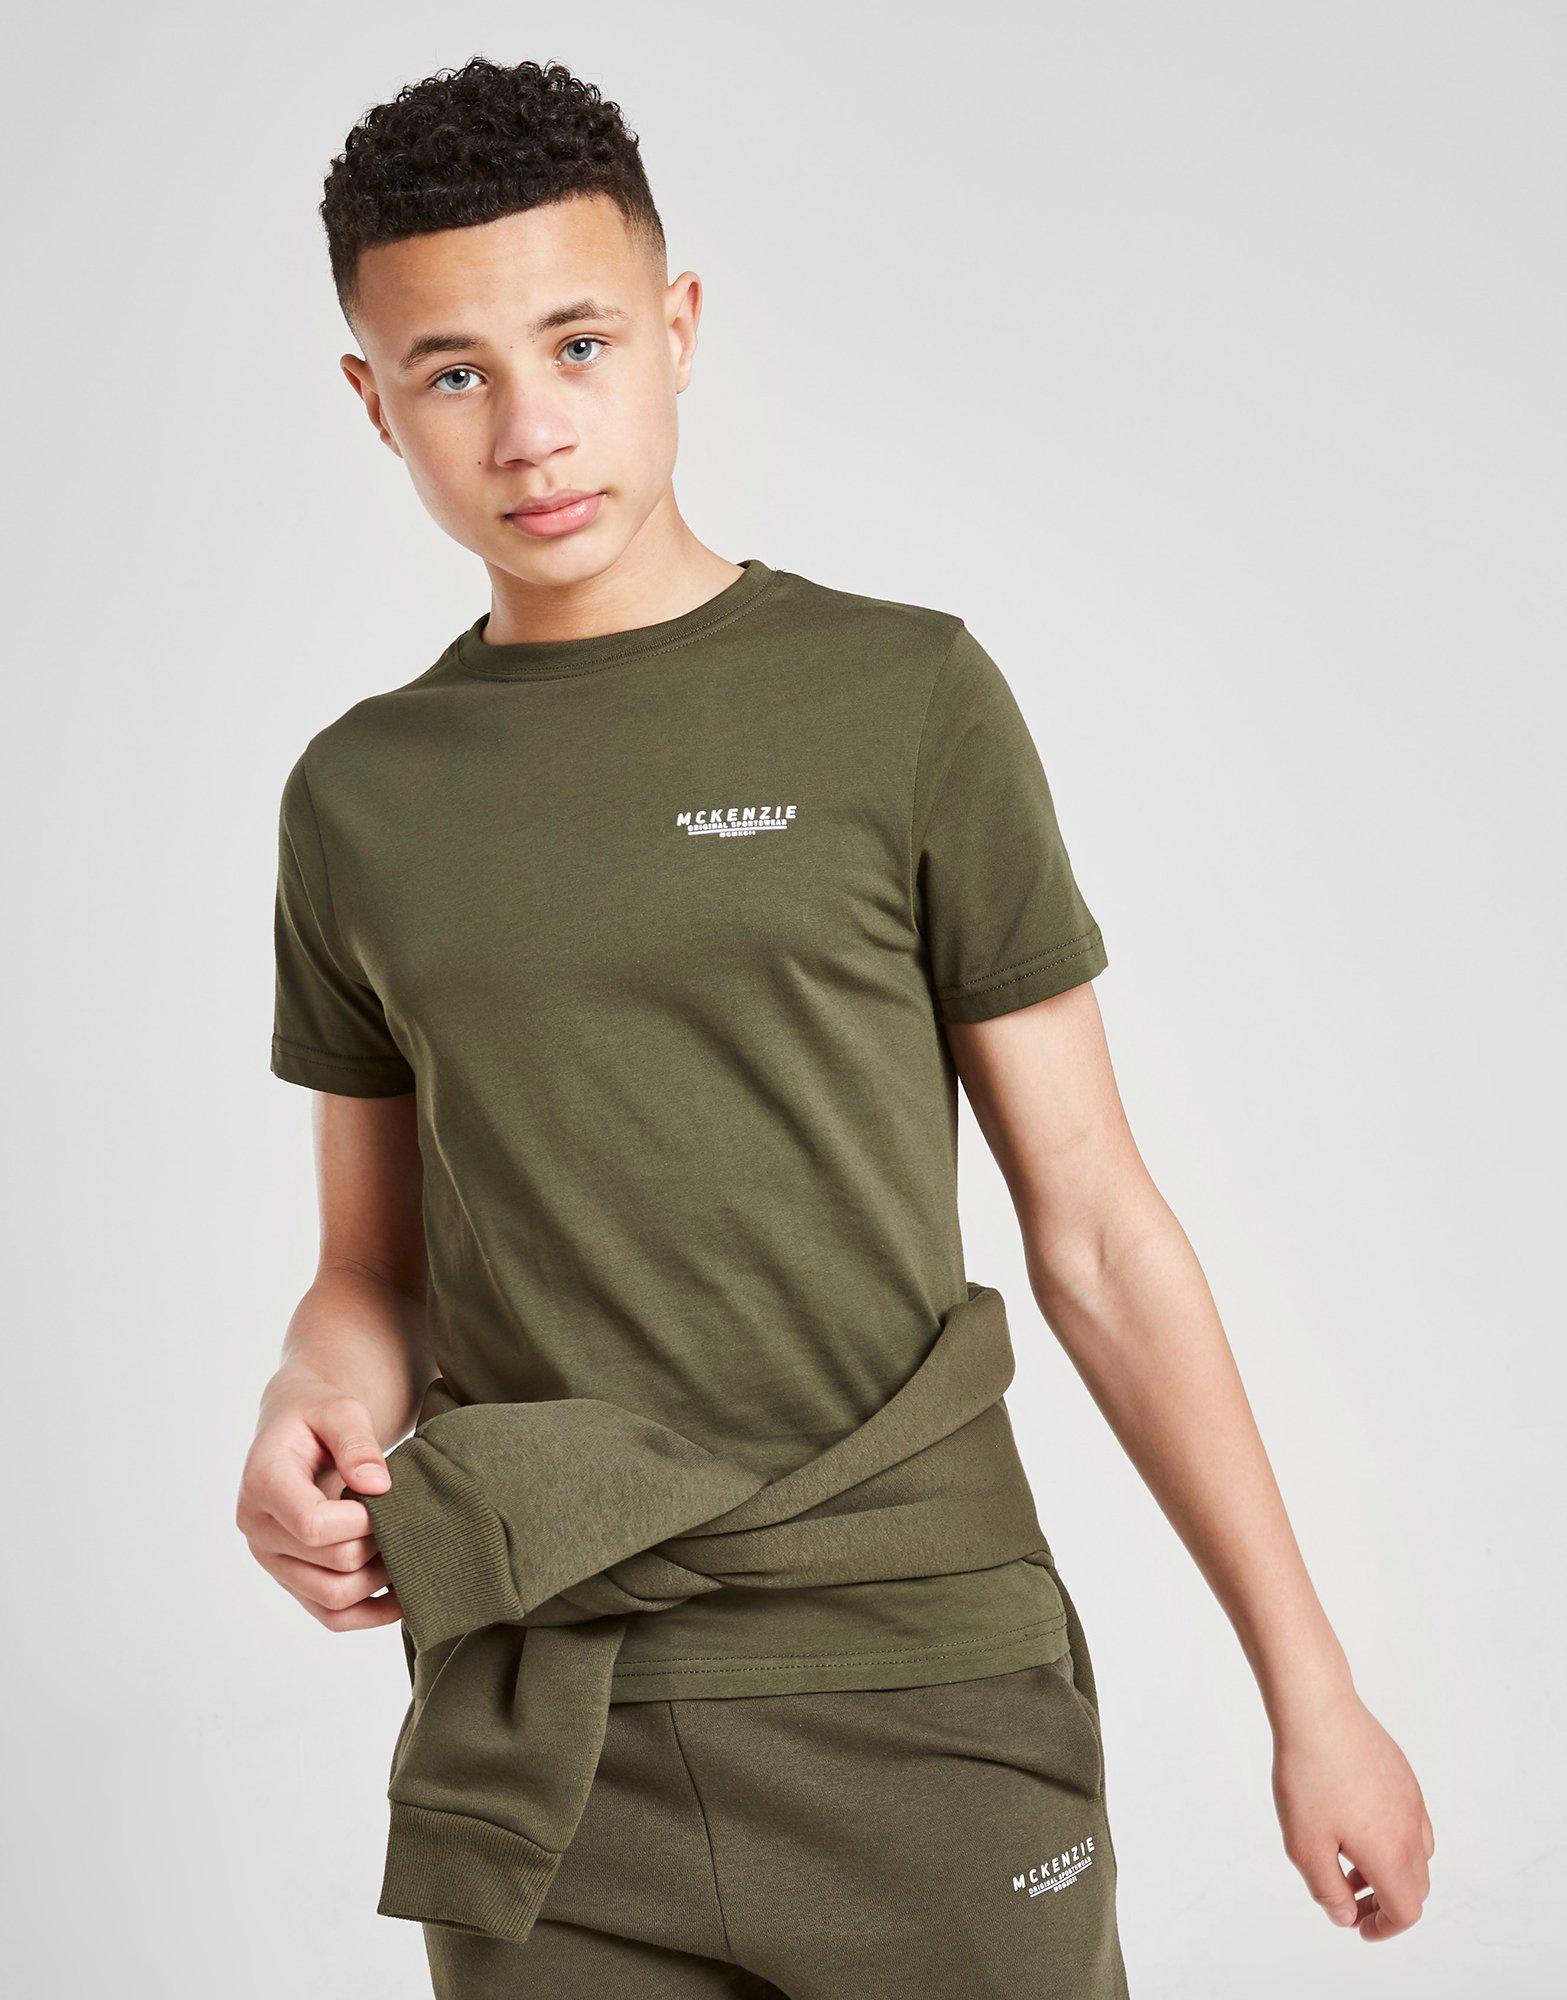 New McKenzie Men’s Essential Short Sleeve T-Shirt